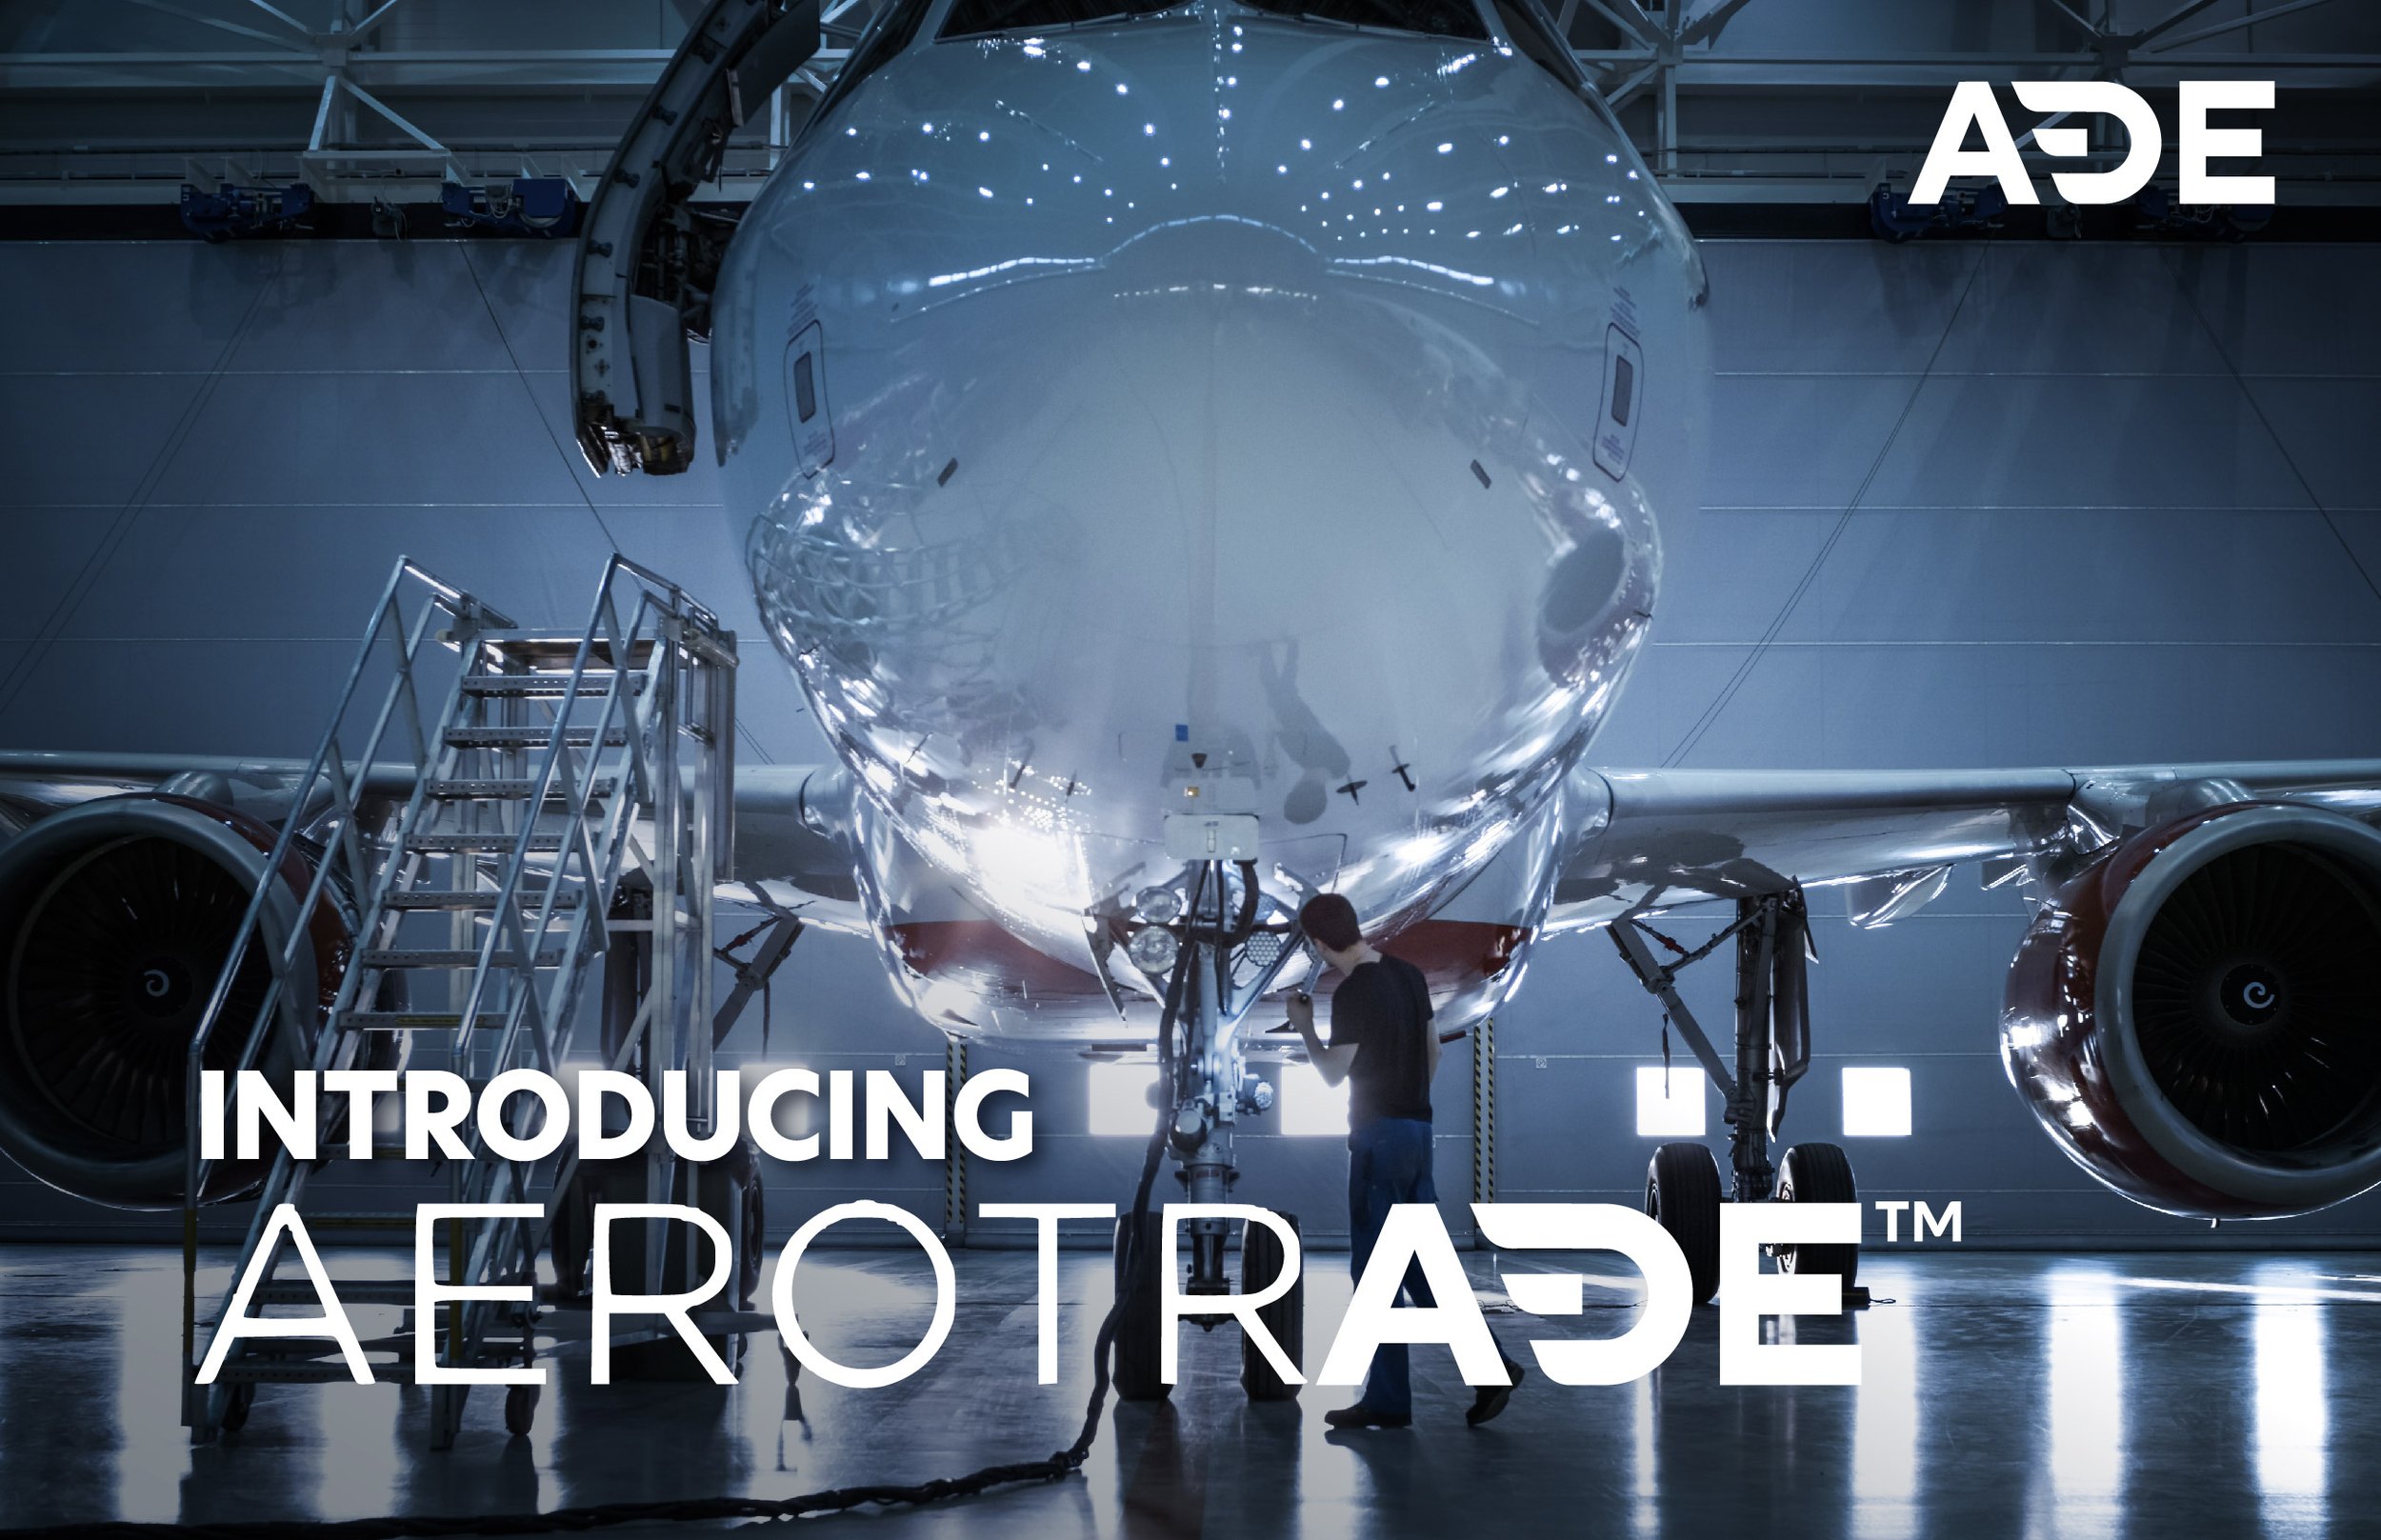 ADE - Aerotrade-02.jpg